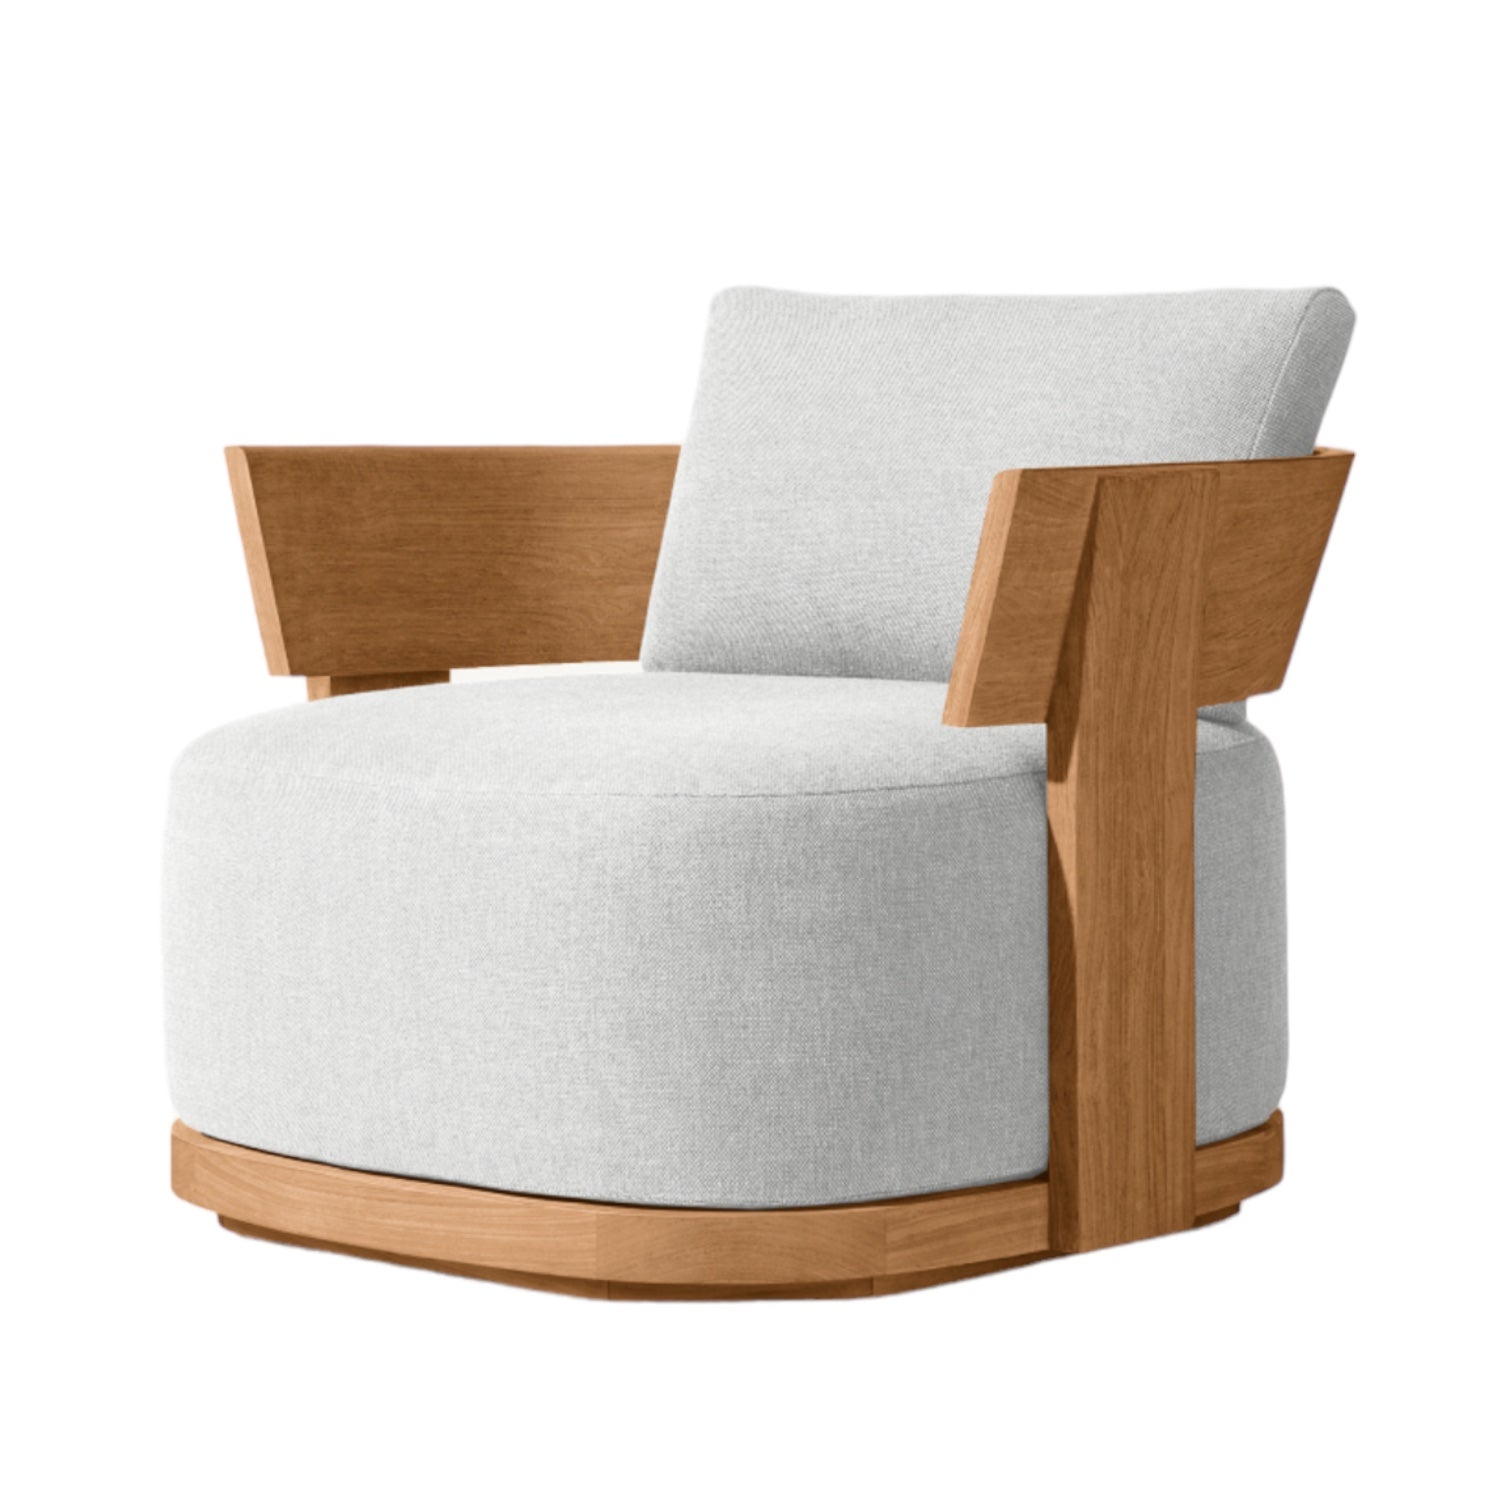 Luxury Teak “Celona” Garden Chair